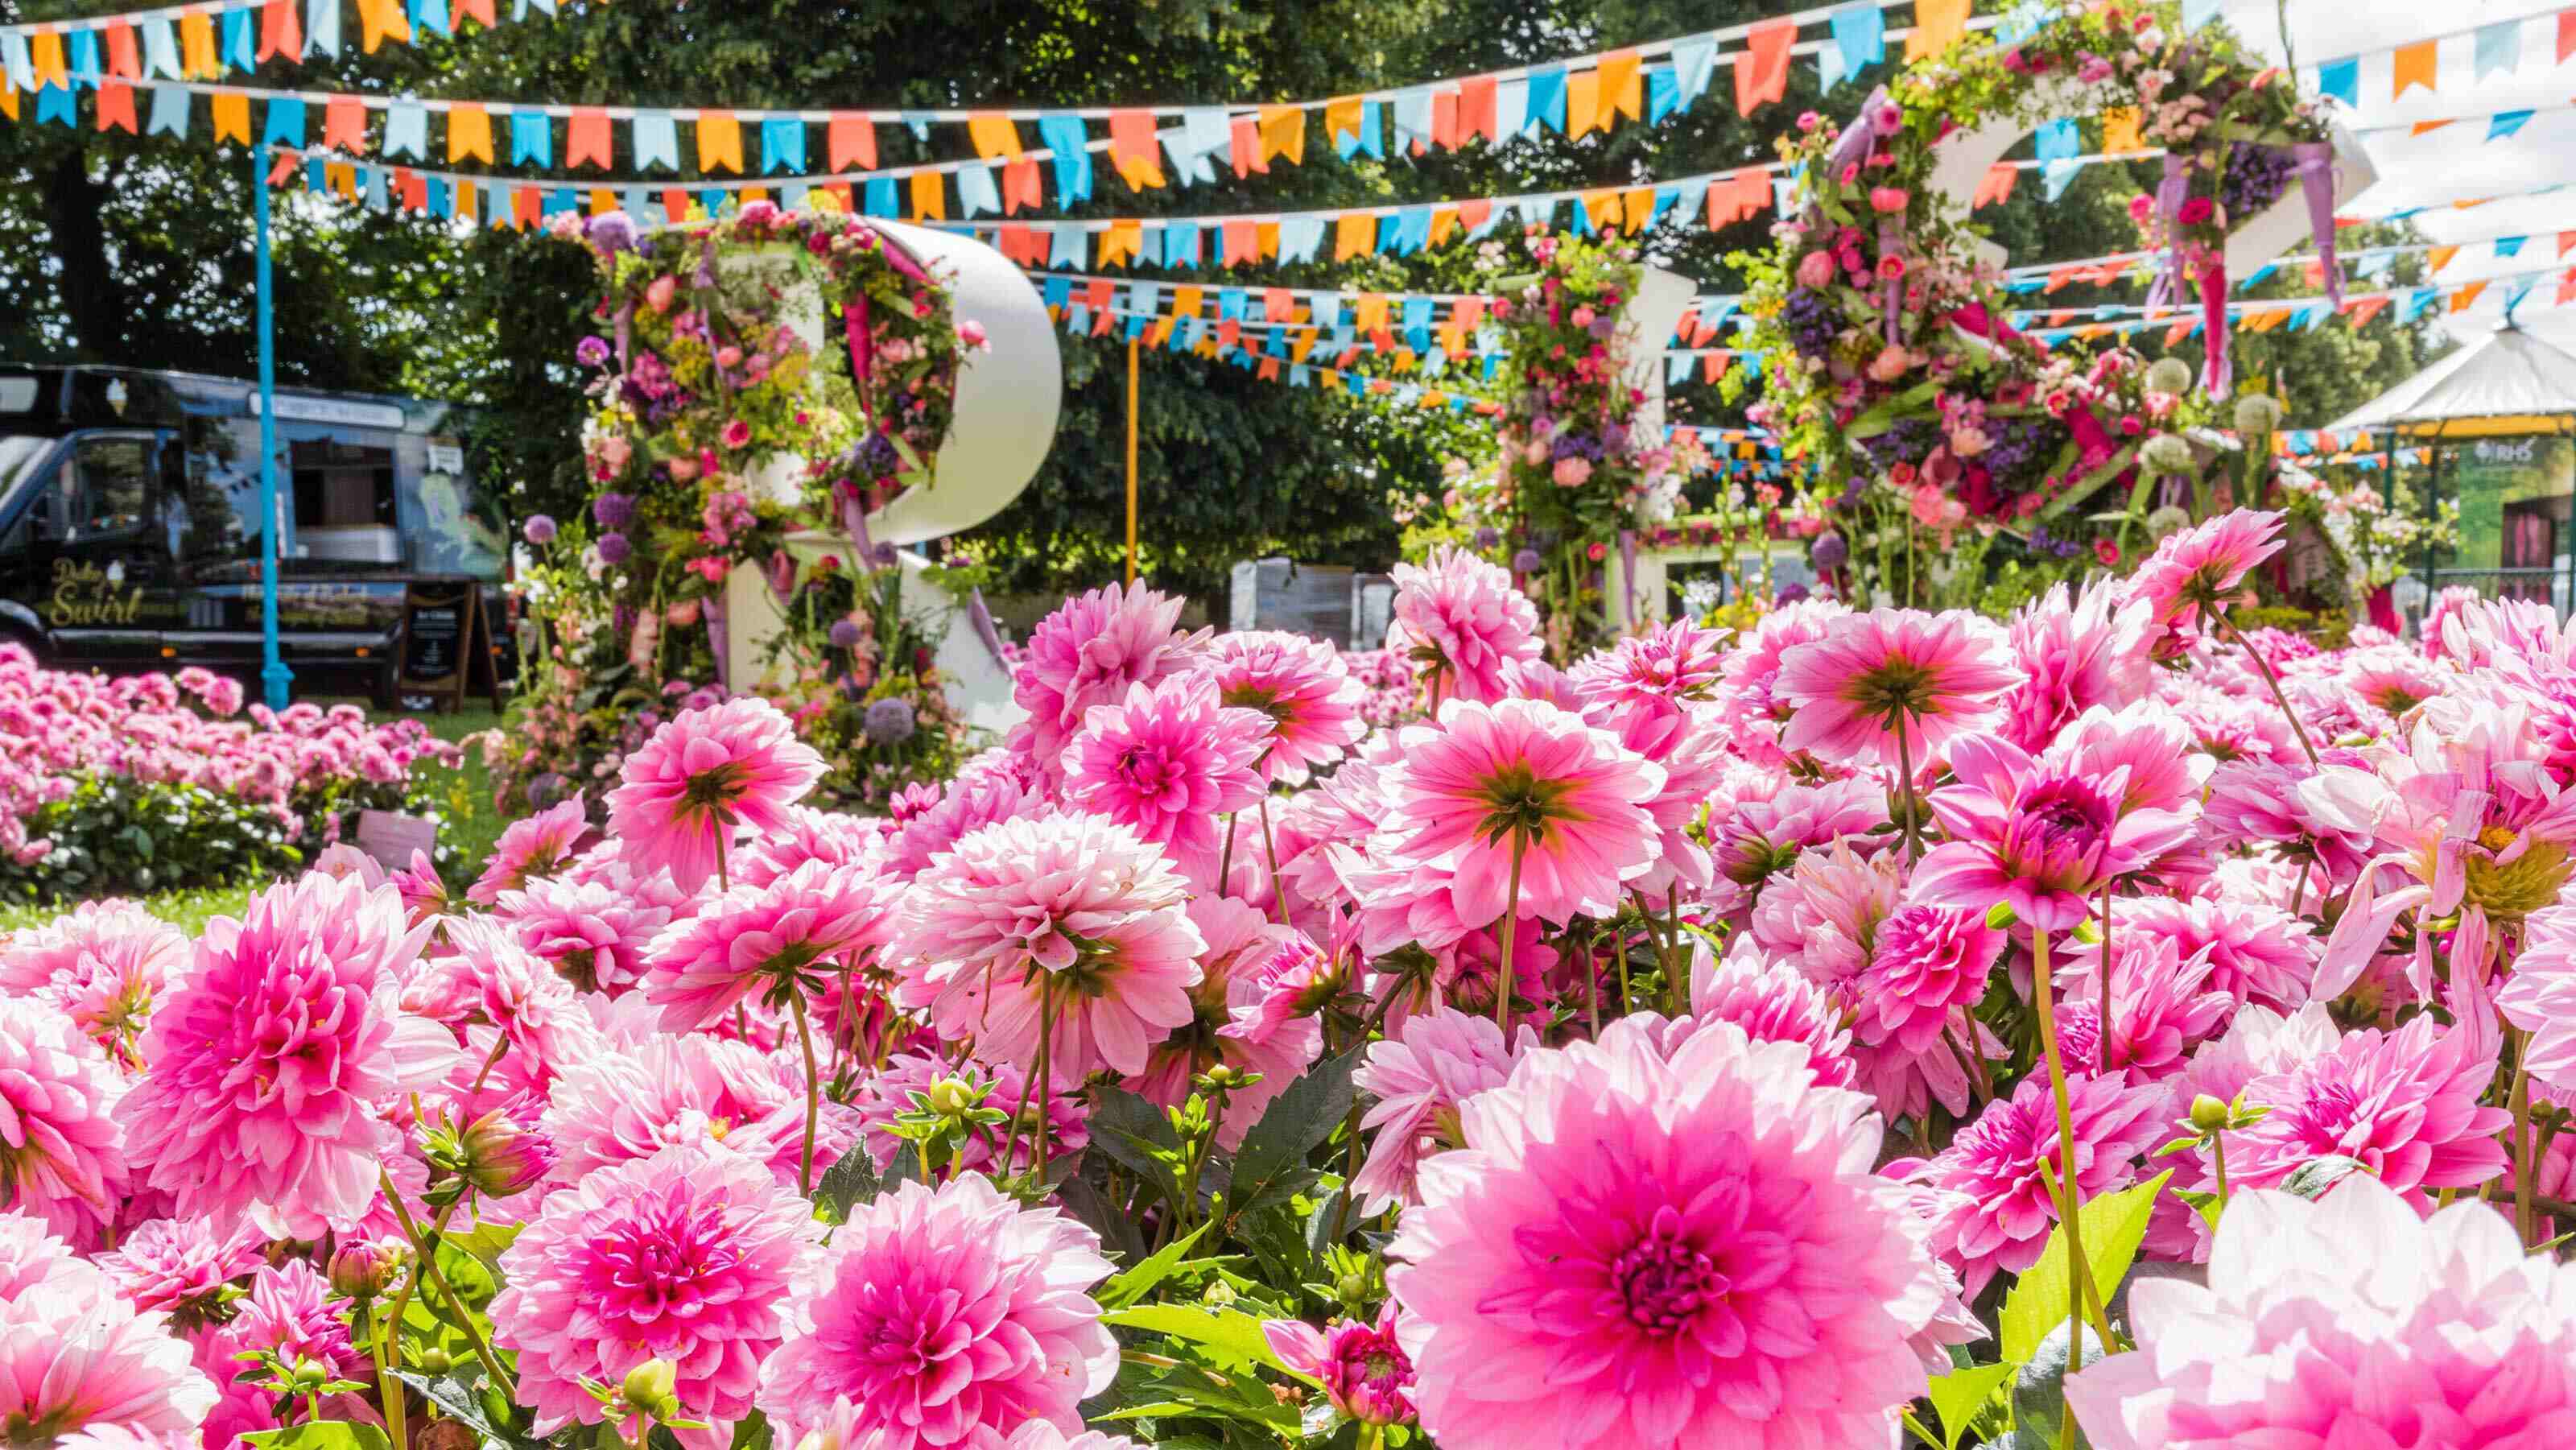 20 Facts About Hampton Court Palace Flower Show Facts net